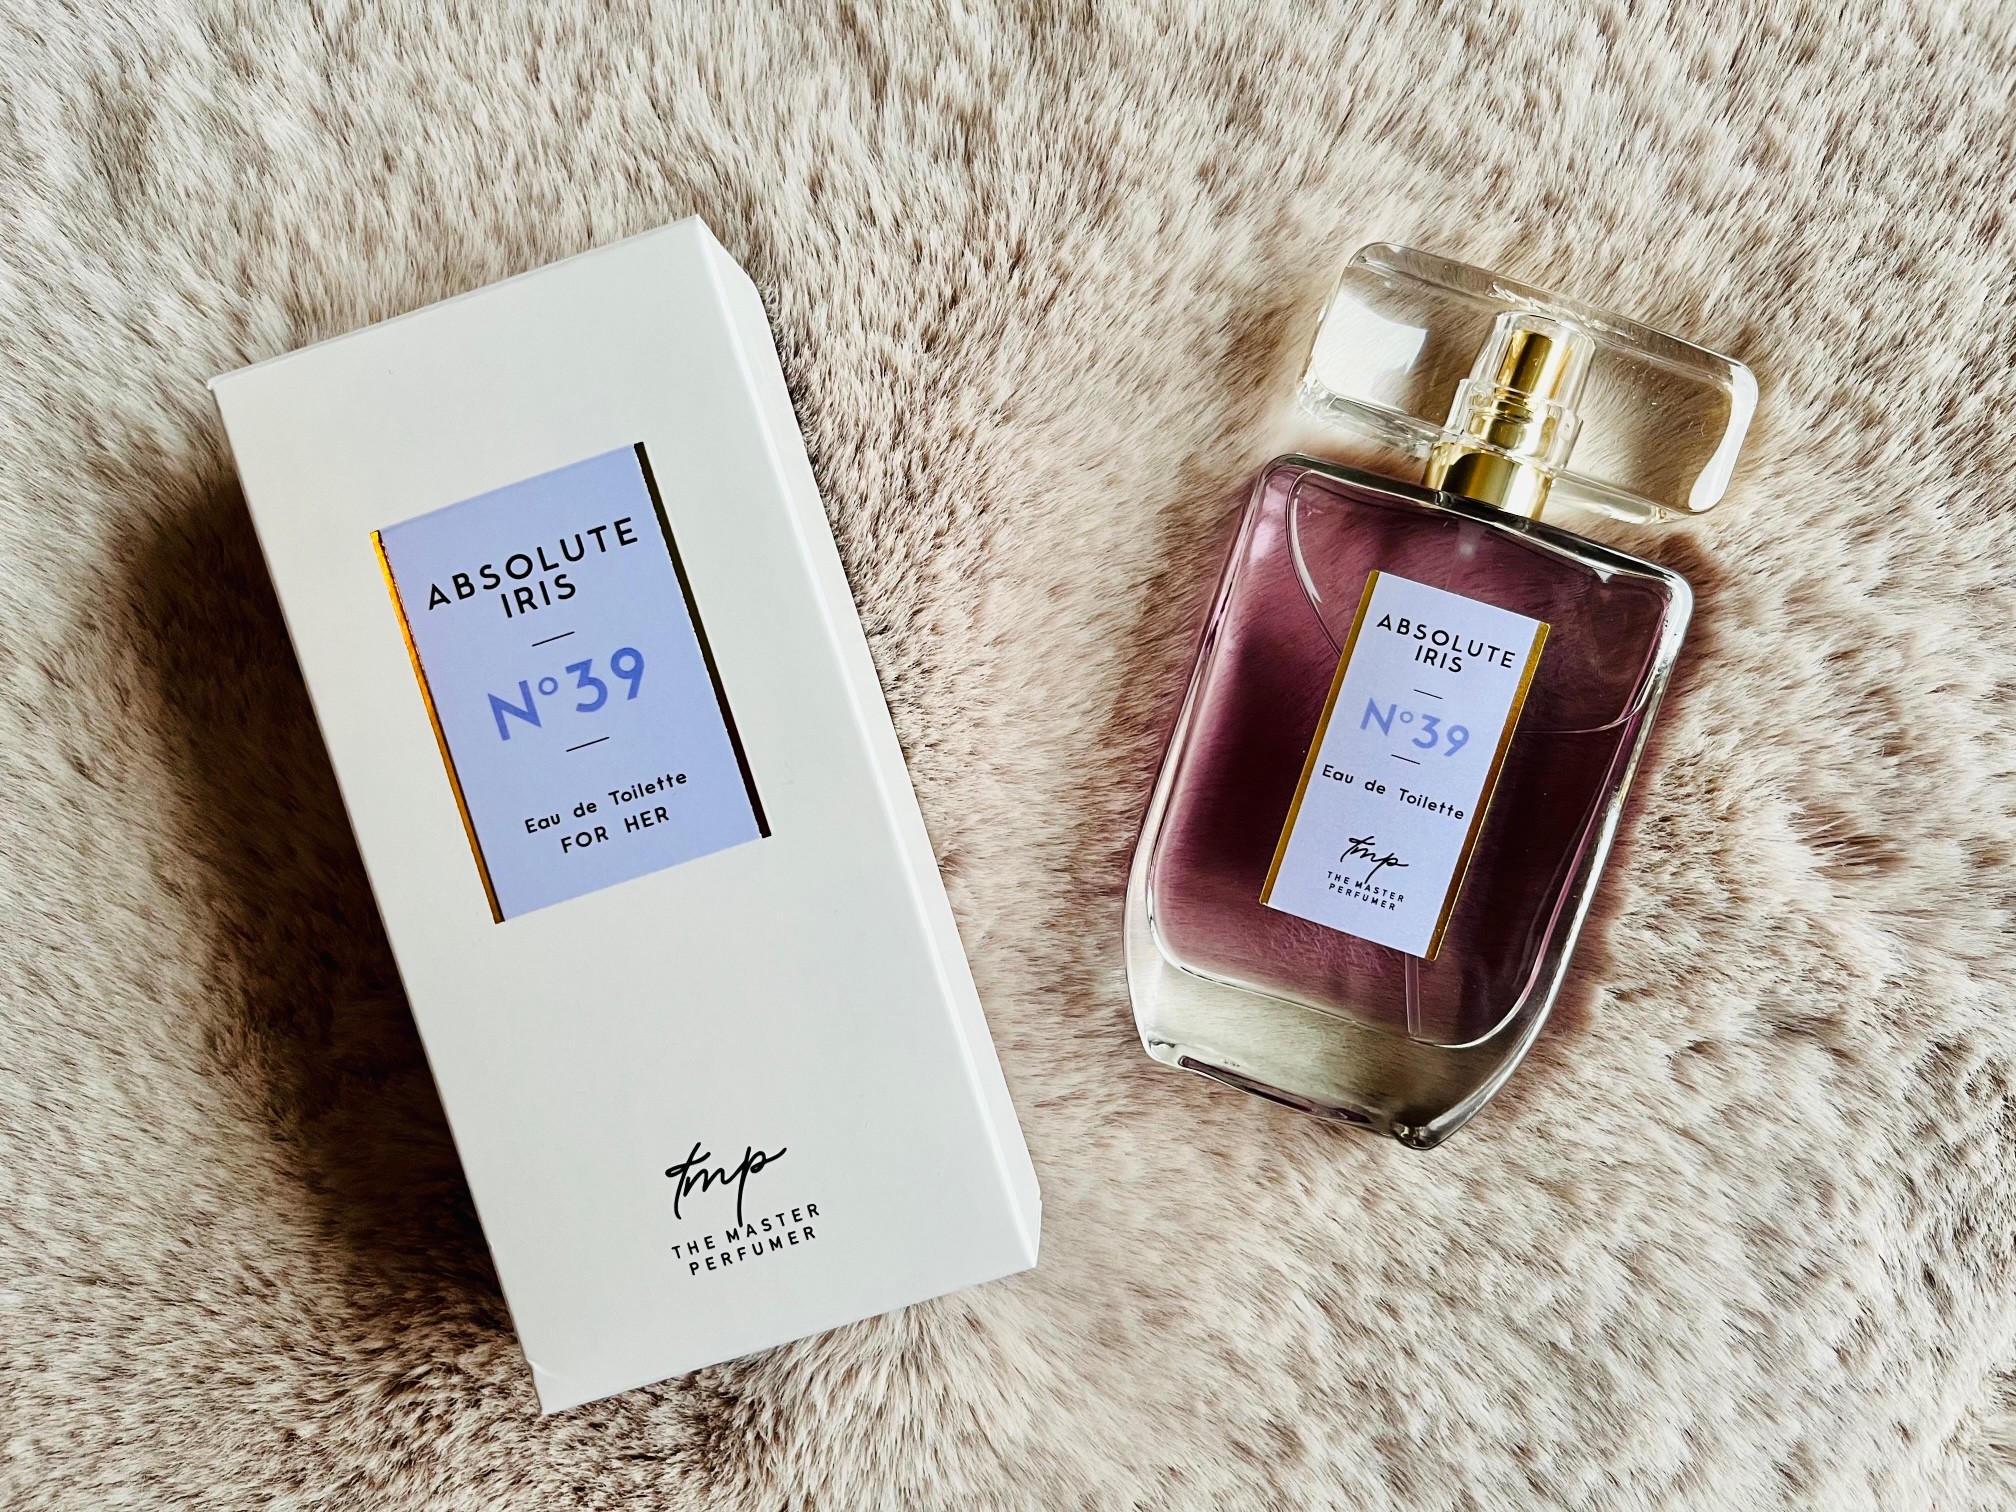 the master perfumer nr. 39 absolute iris